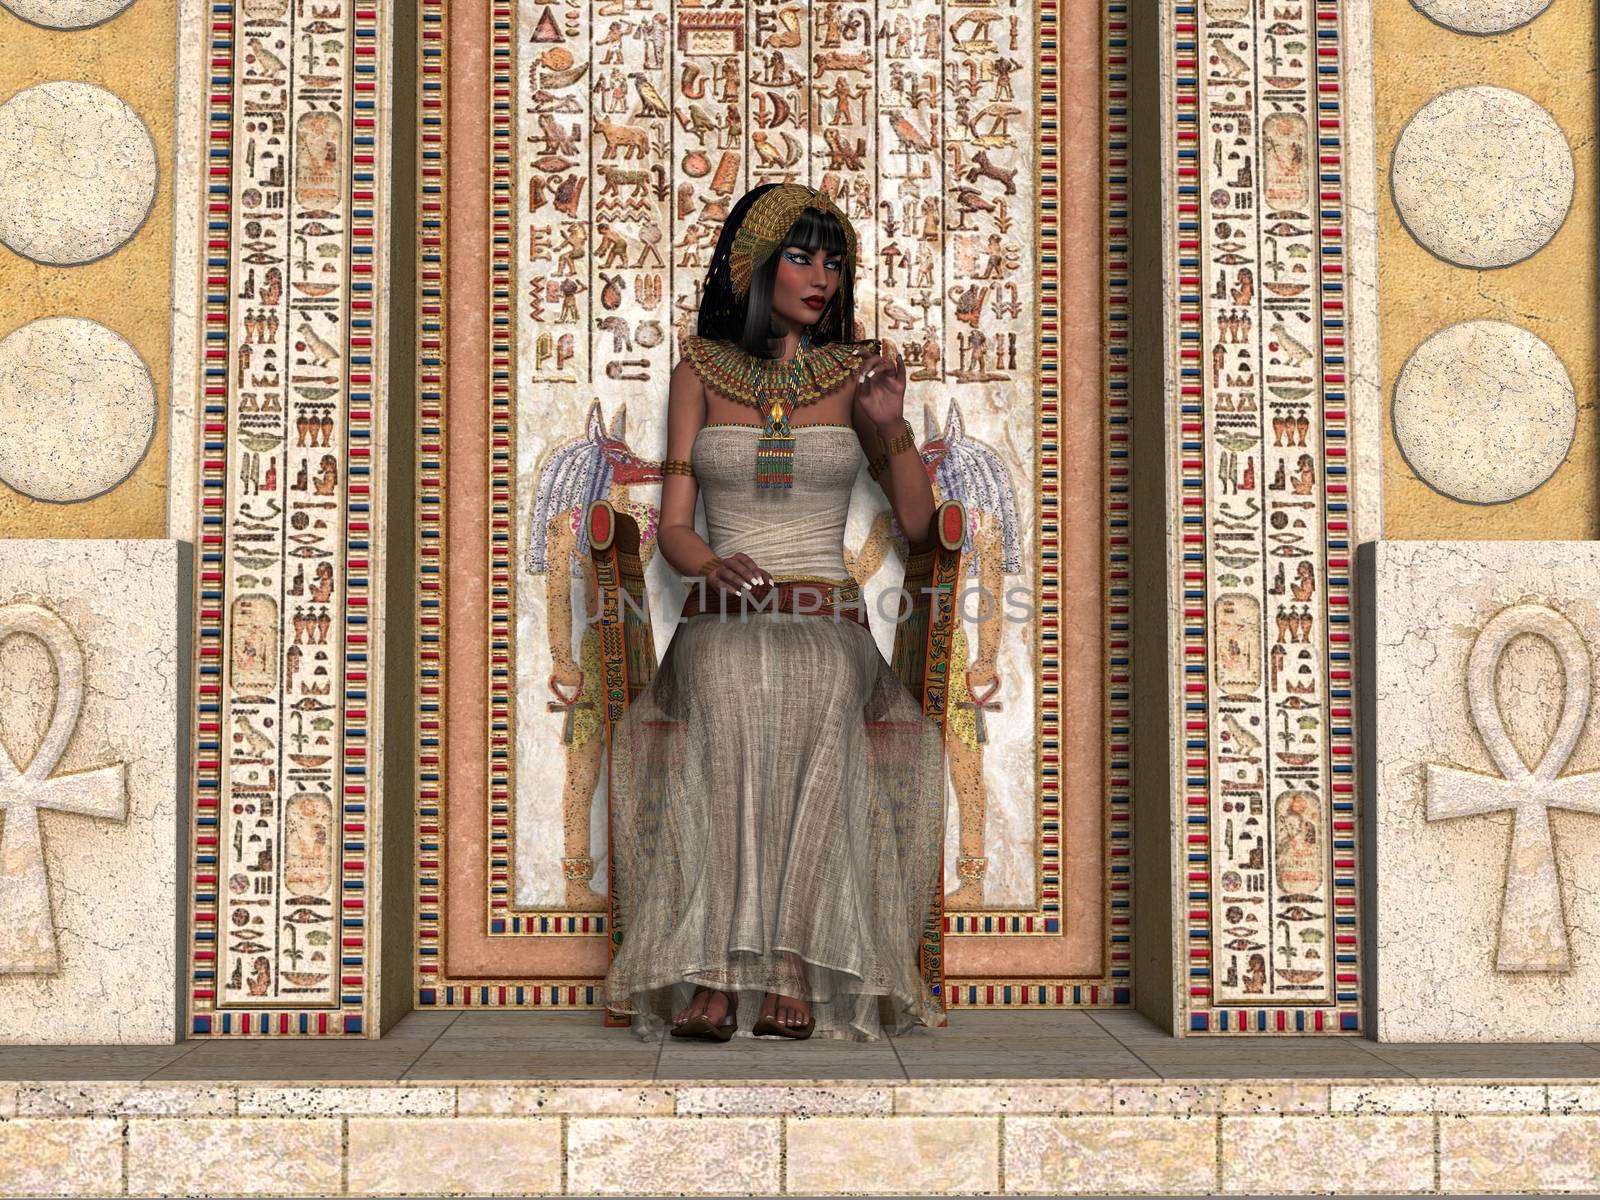 Egyptian Princess Throne by Catmando